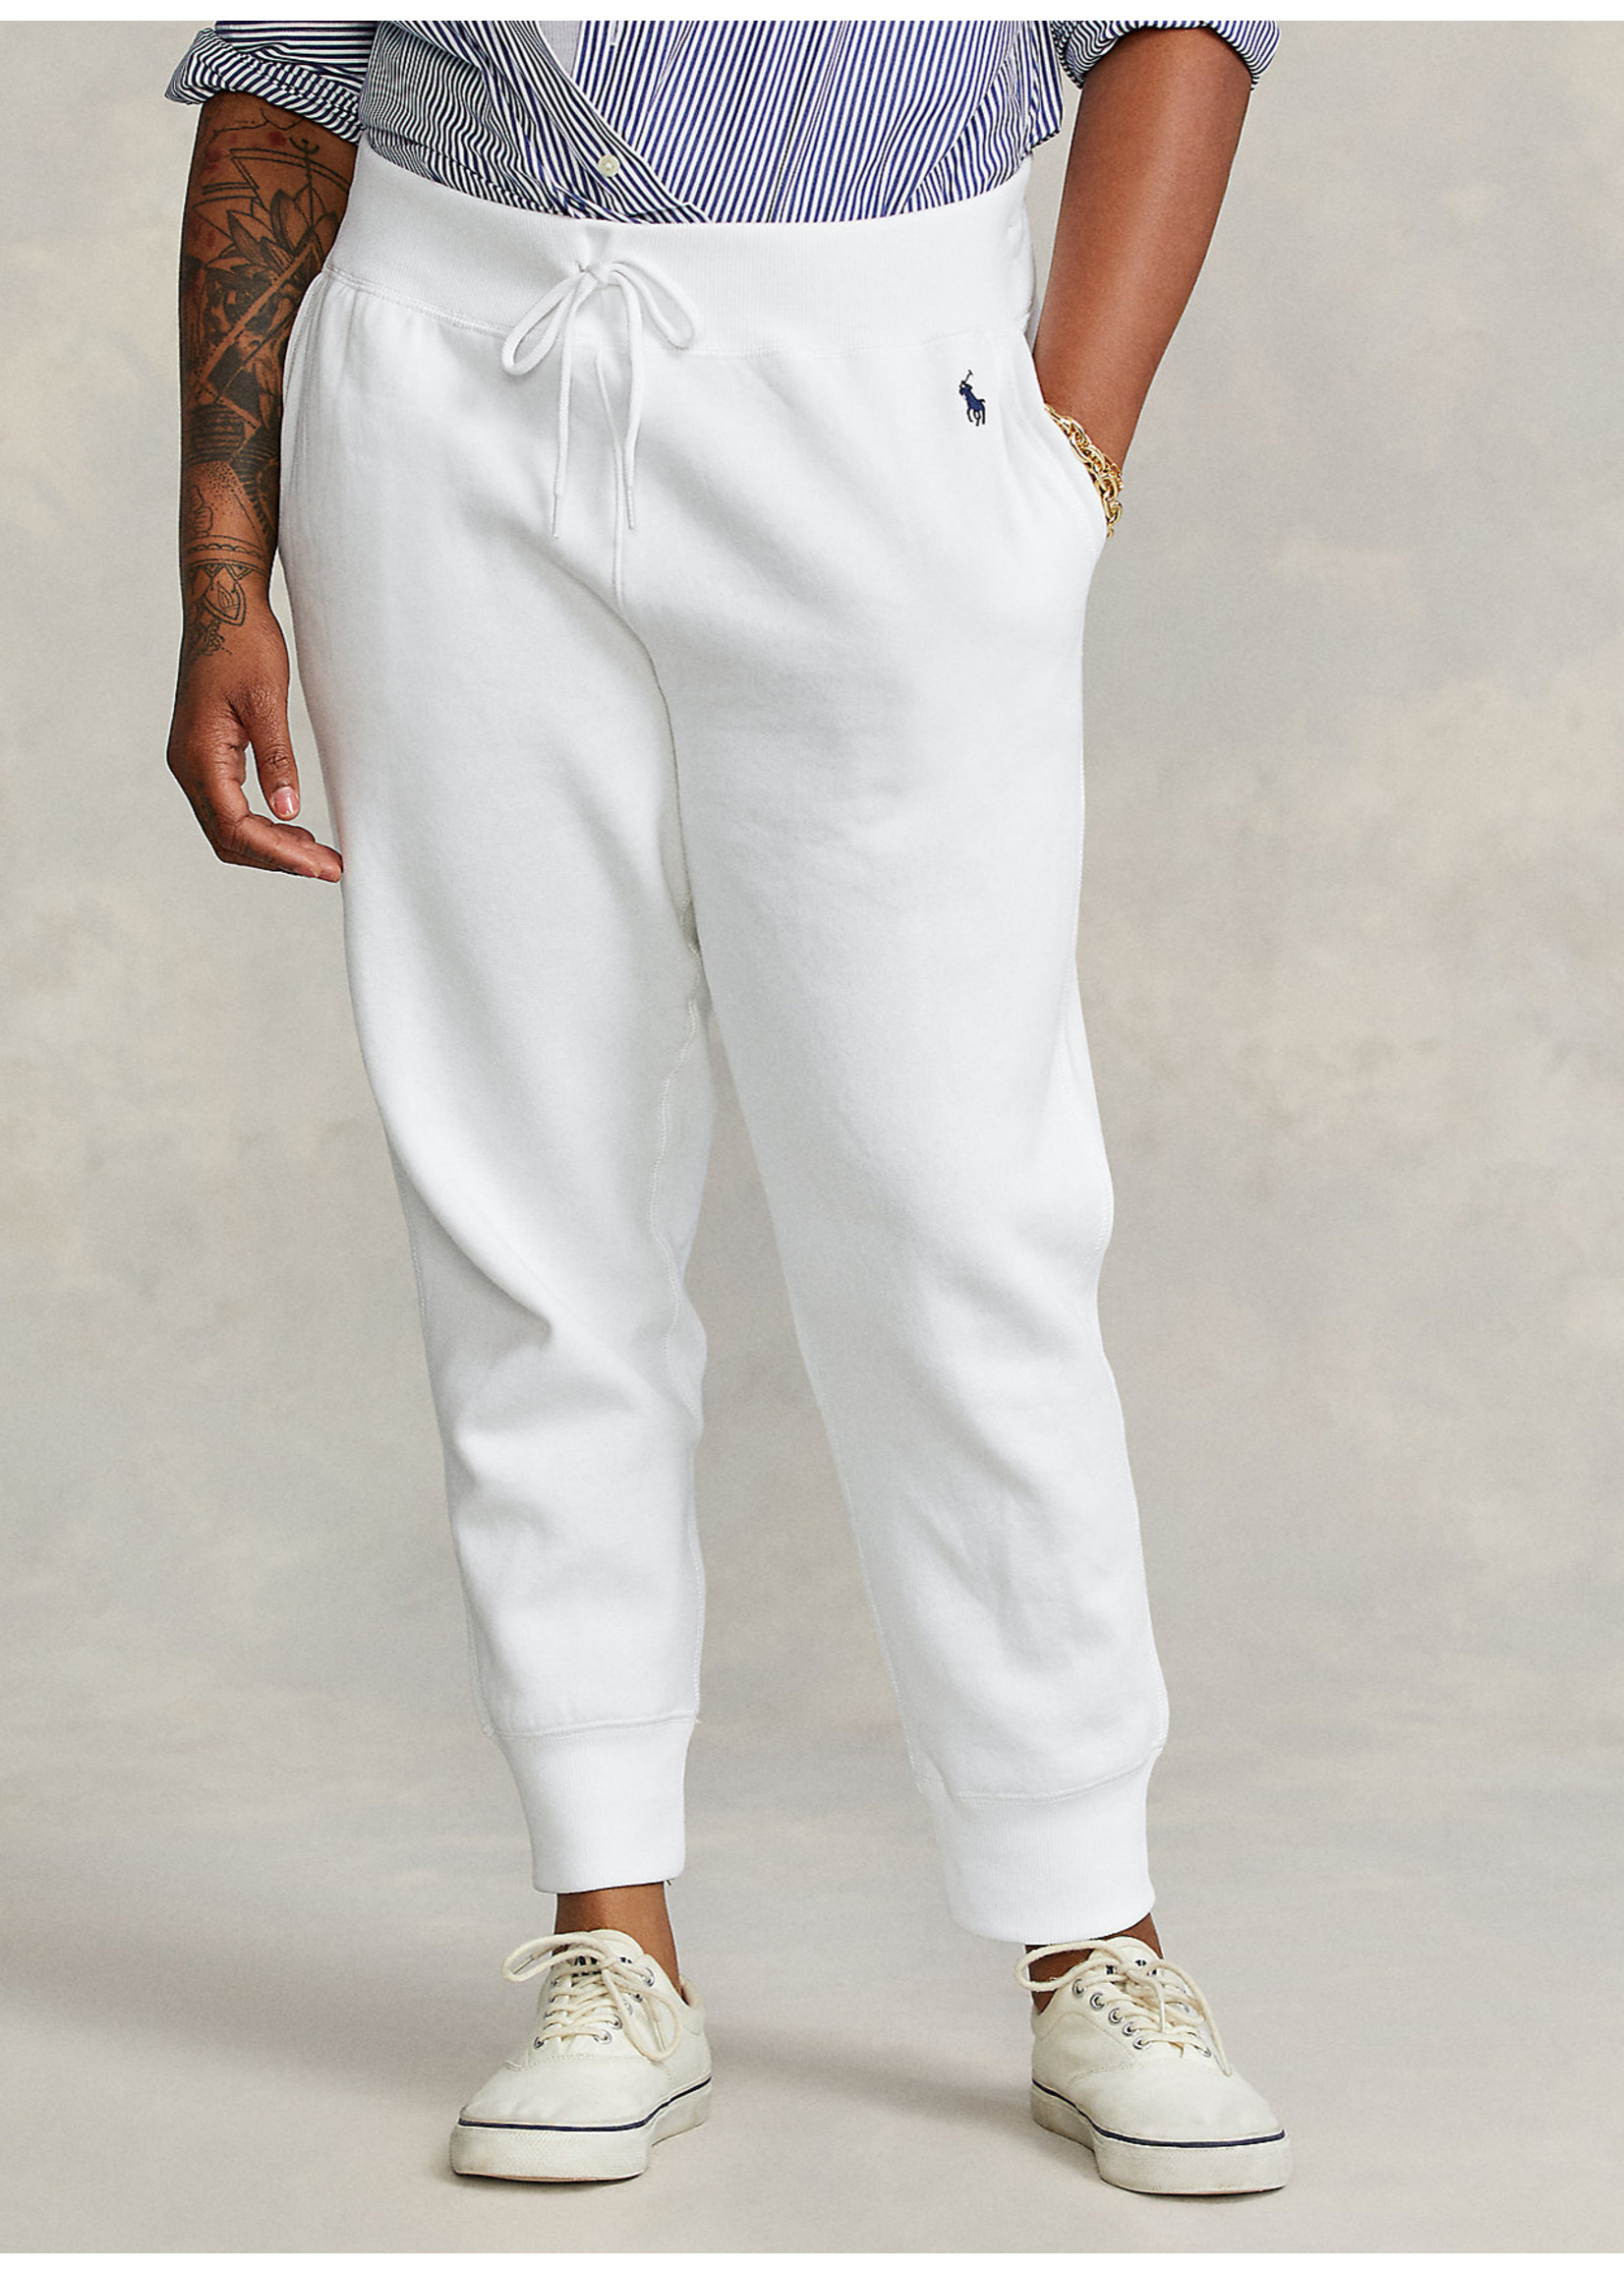 Ralph Lauren Fleece Pant Ankle Athletic White